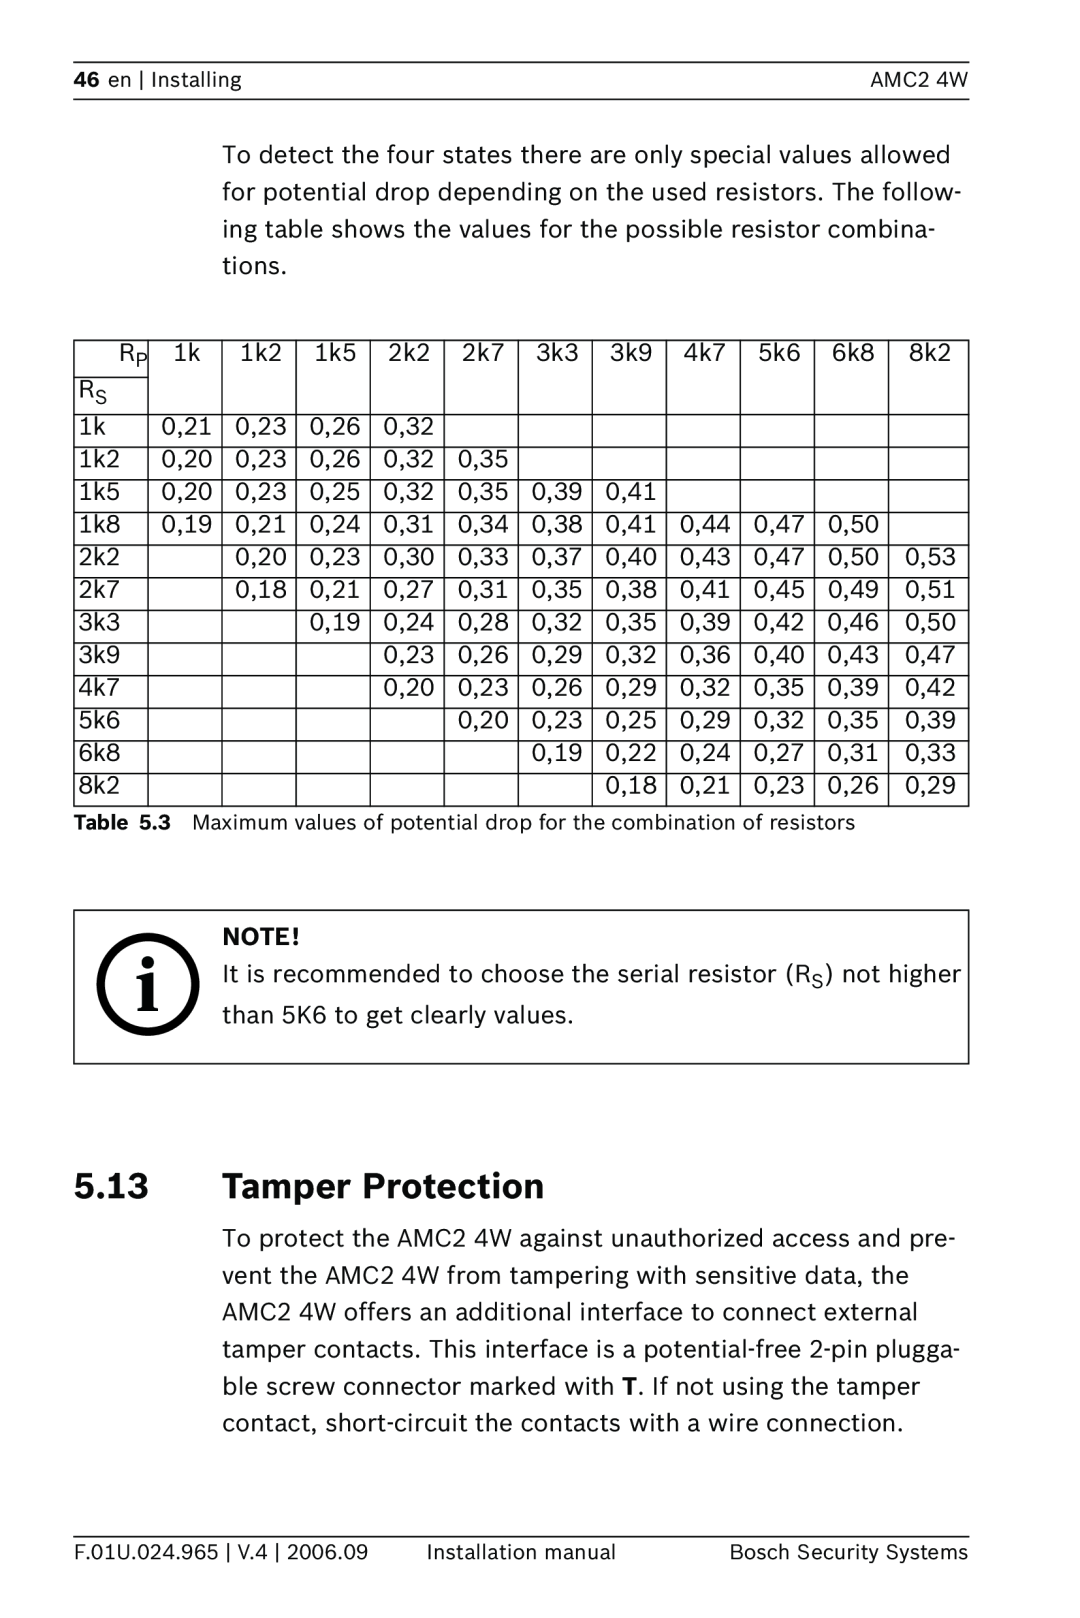 Bosch Appliances APC-AMC2-4WCF, APC-AMC2-4WUS installation manual 5.13Tamper Protection 